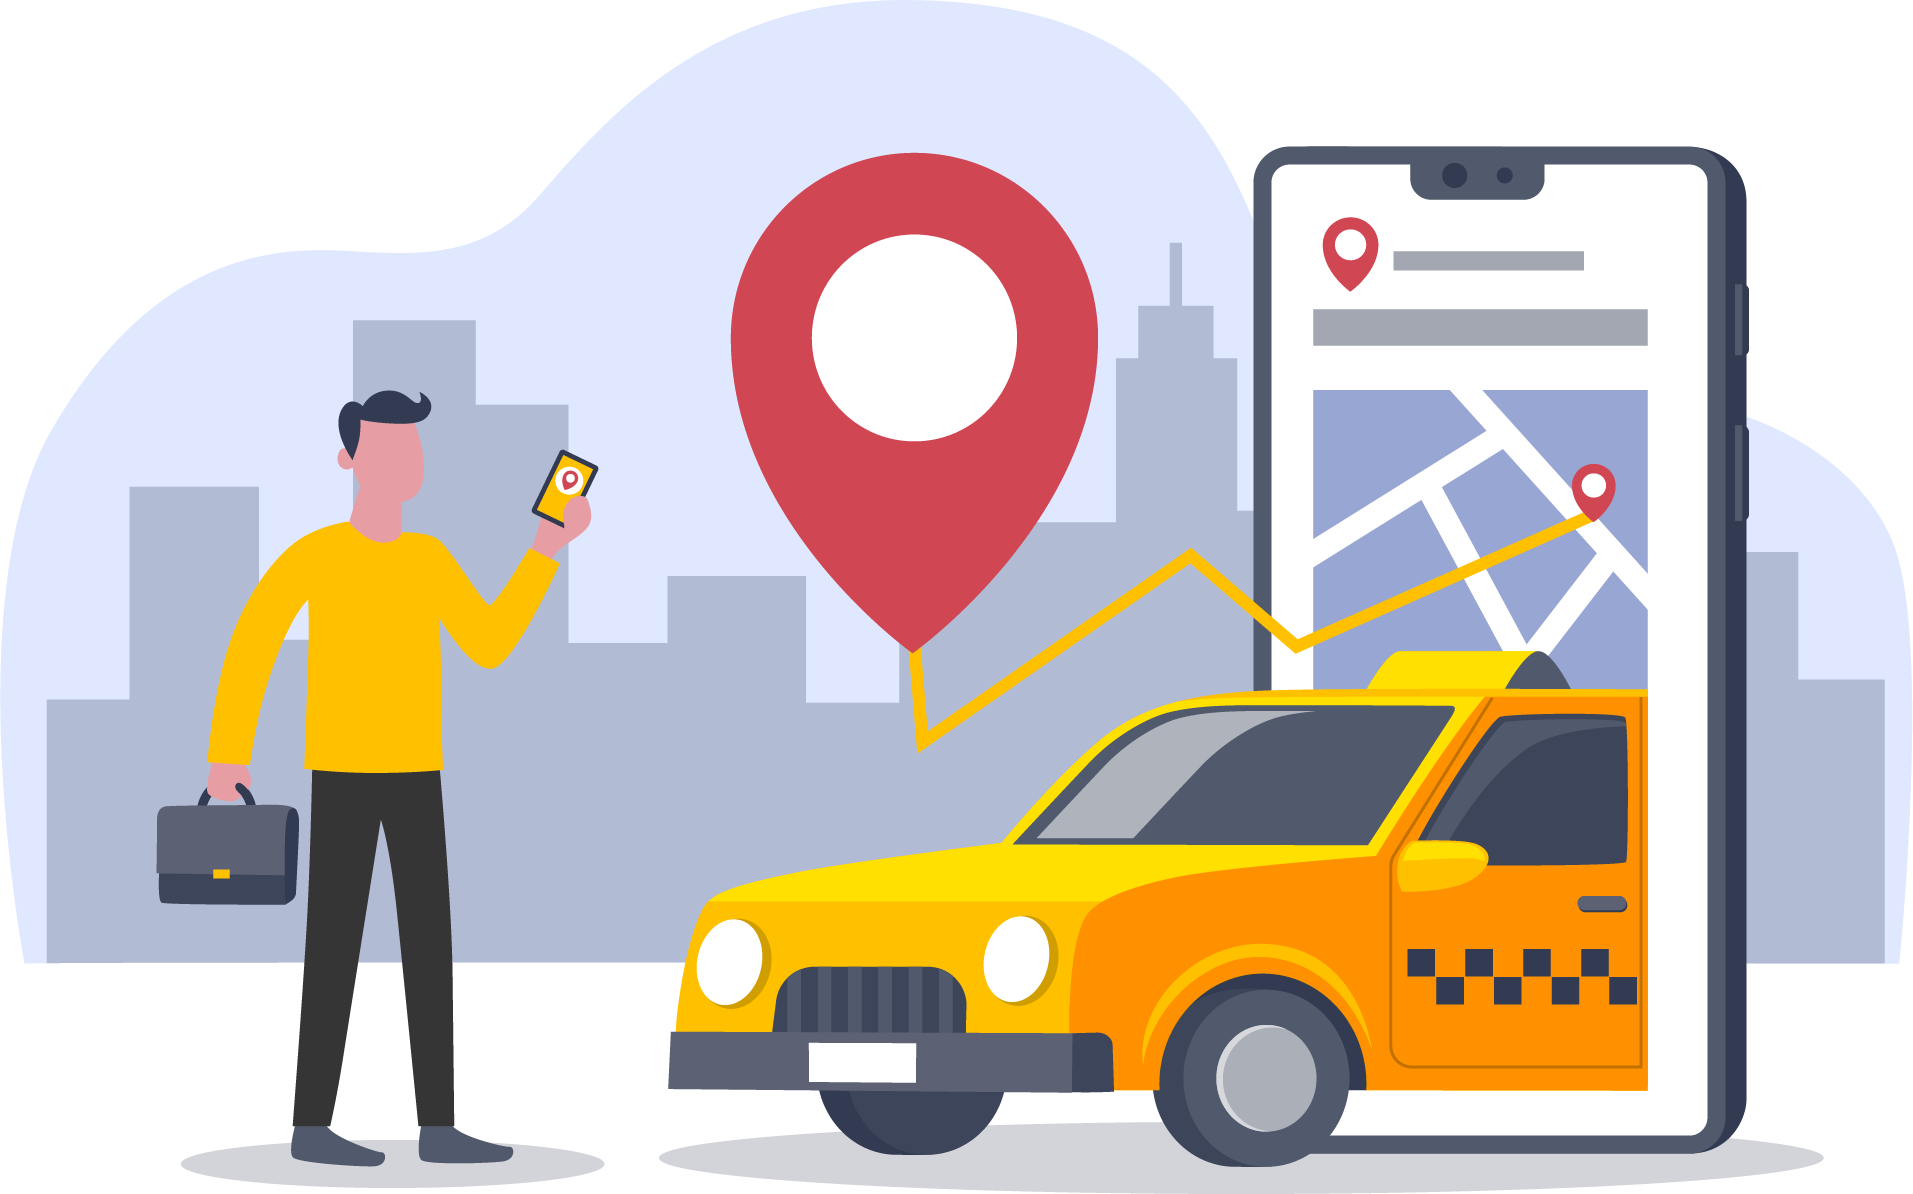 iCabbi alternative taxi dispatch system